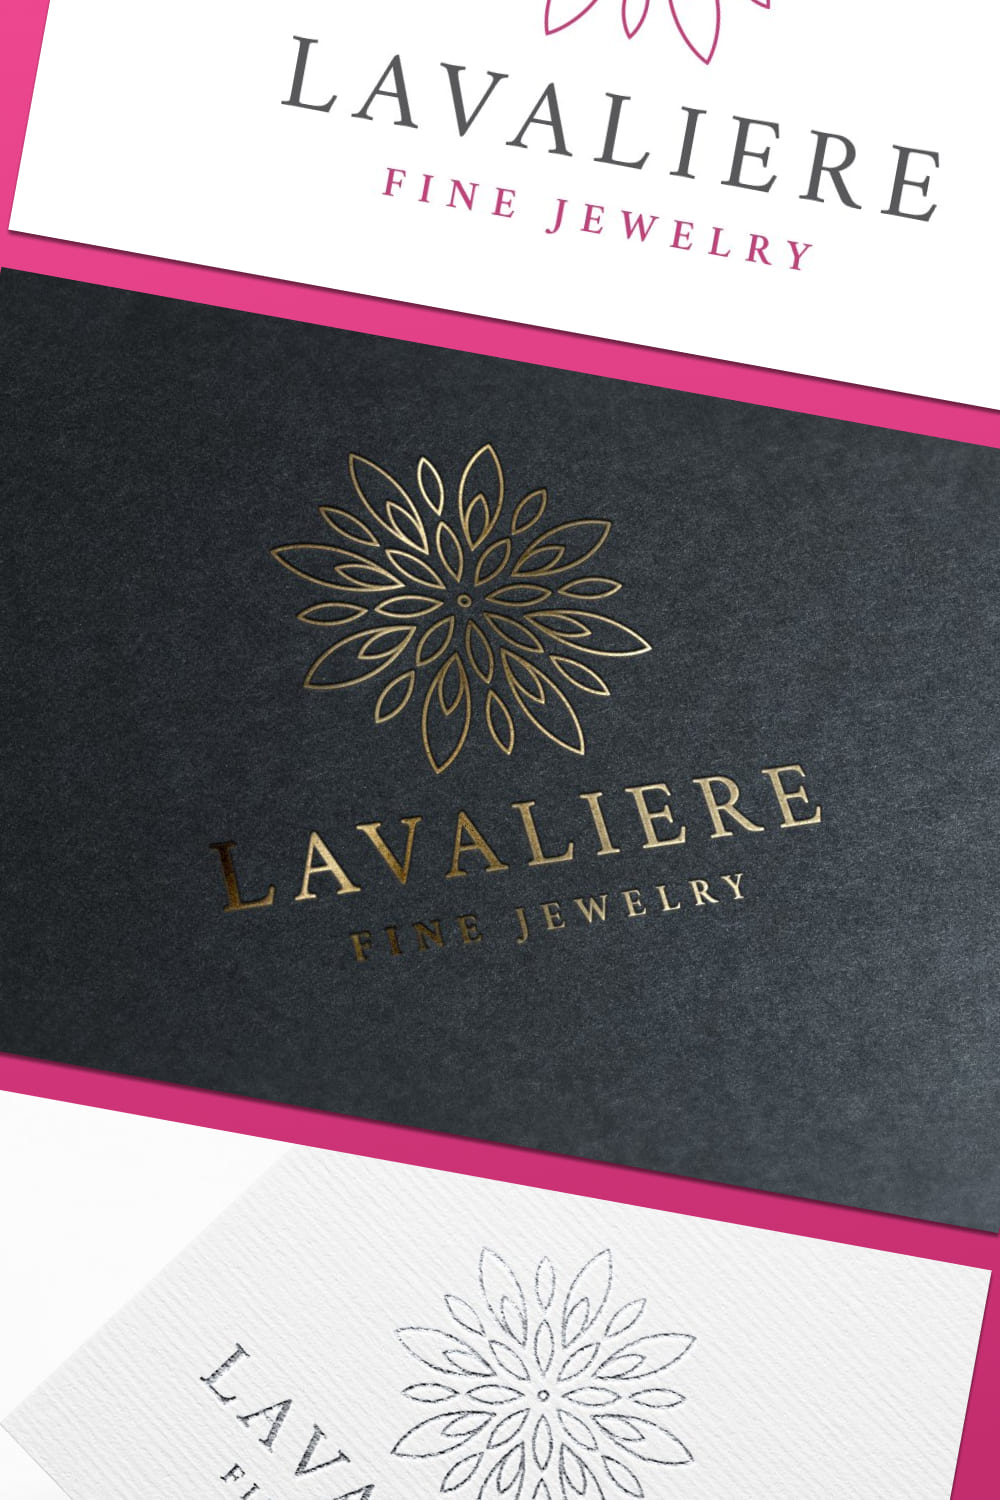 lavaliere jewelry logo template design.